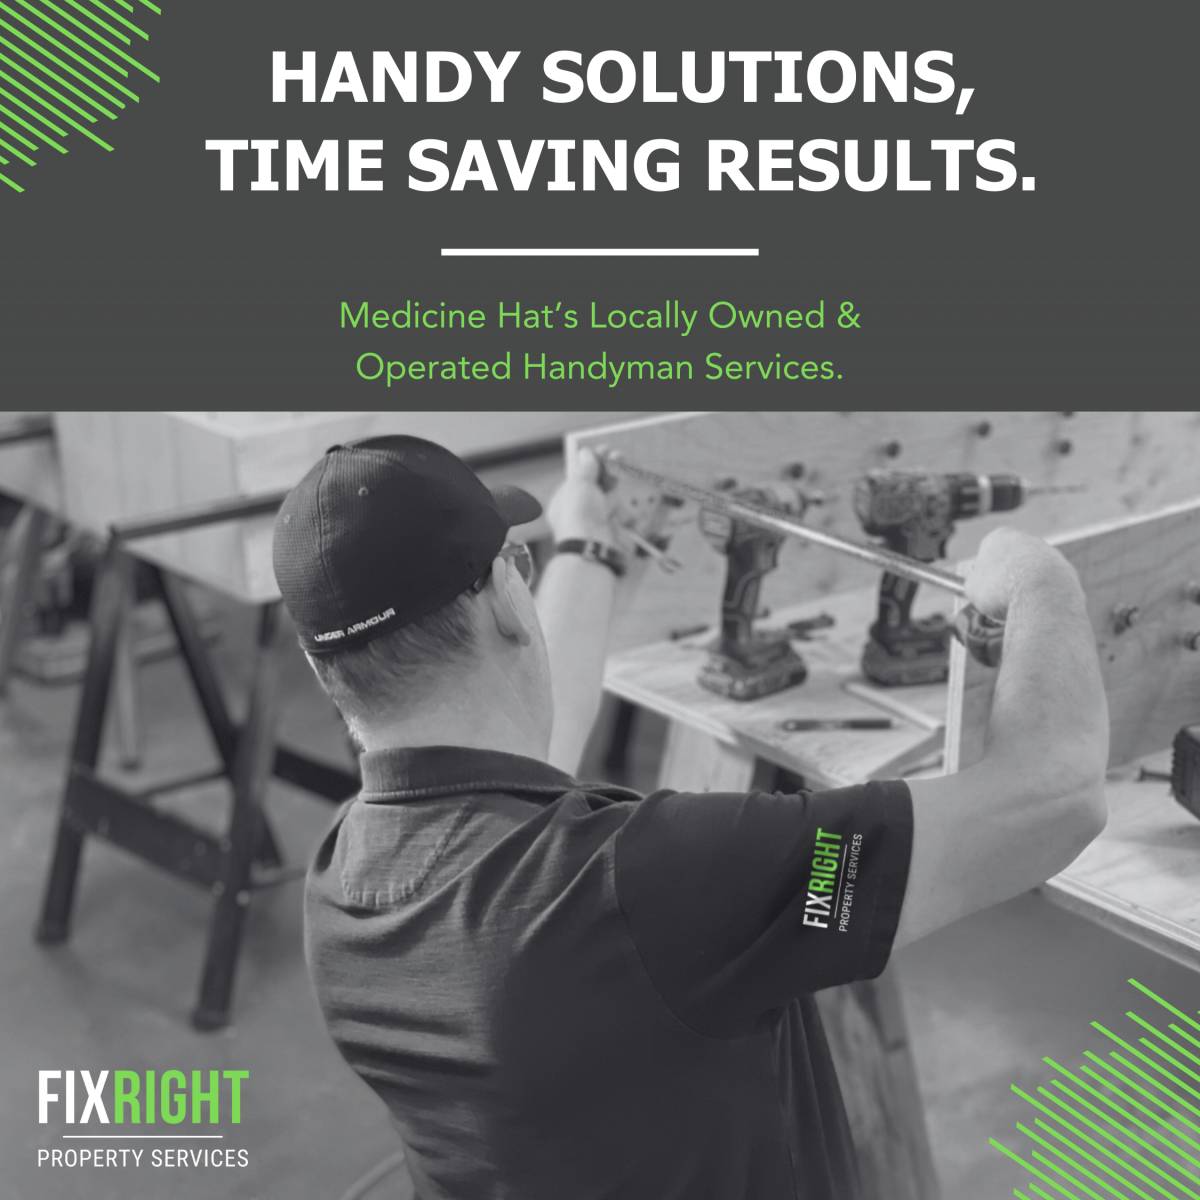 Fixright Handyman Services - Medicine Hat - Phone or Tablet Repair